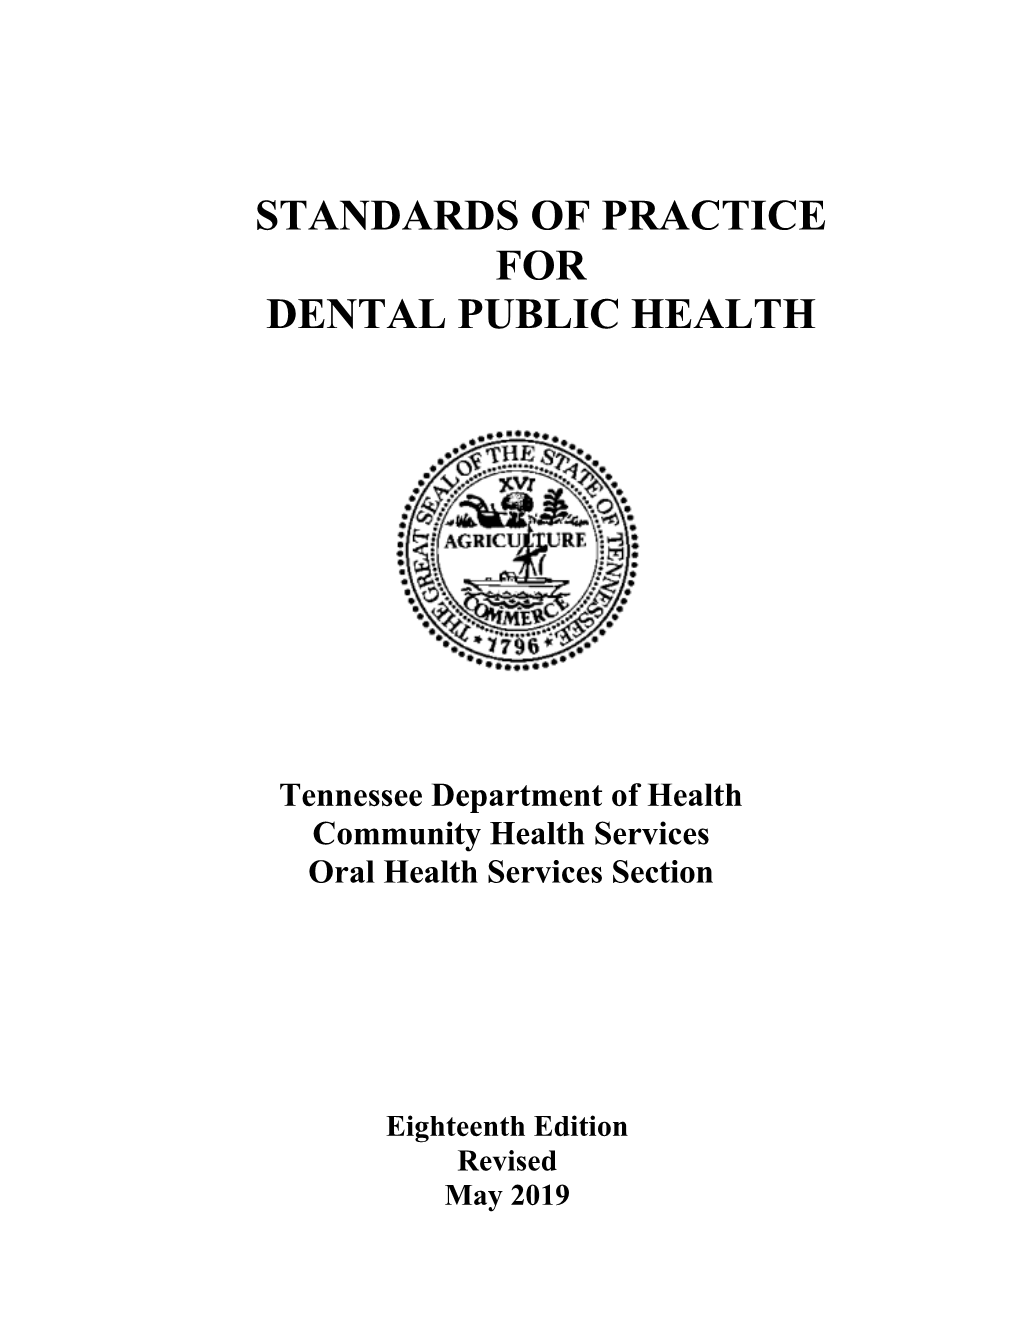 Standards of Practice for Dental Public Health